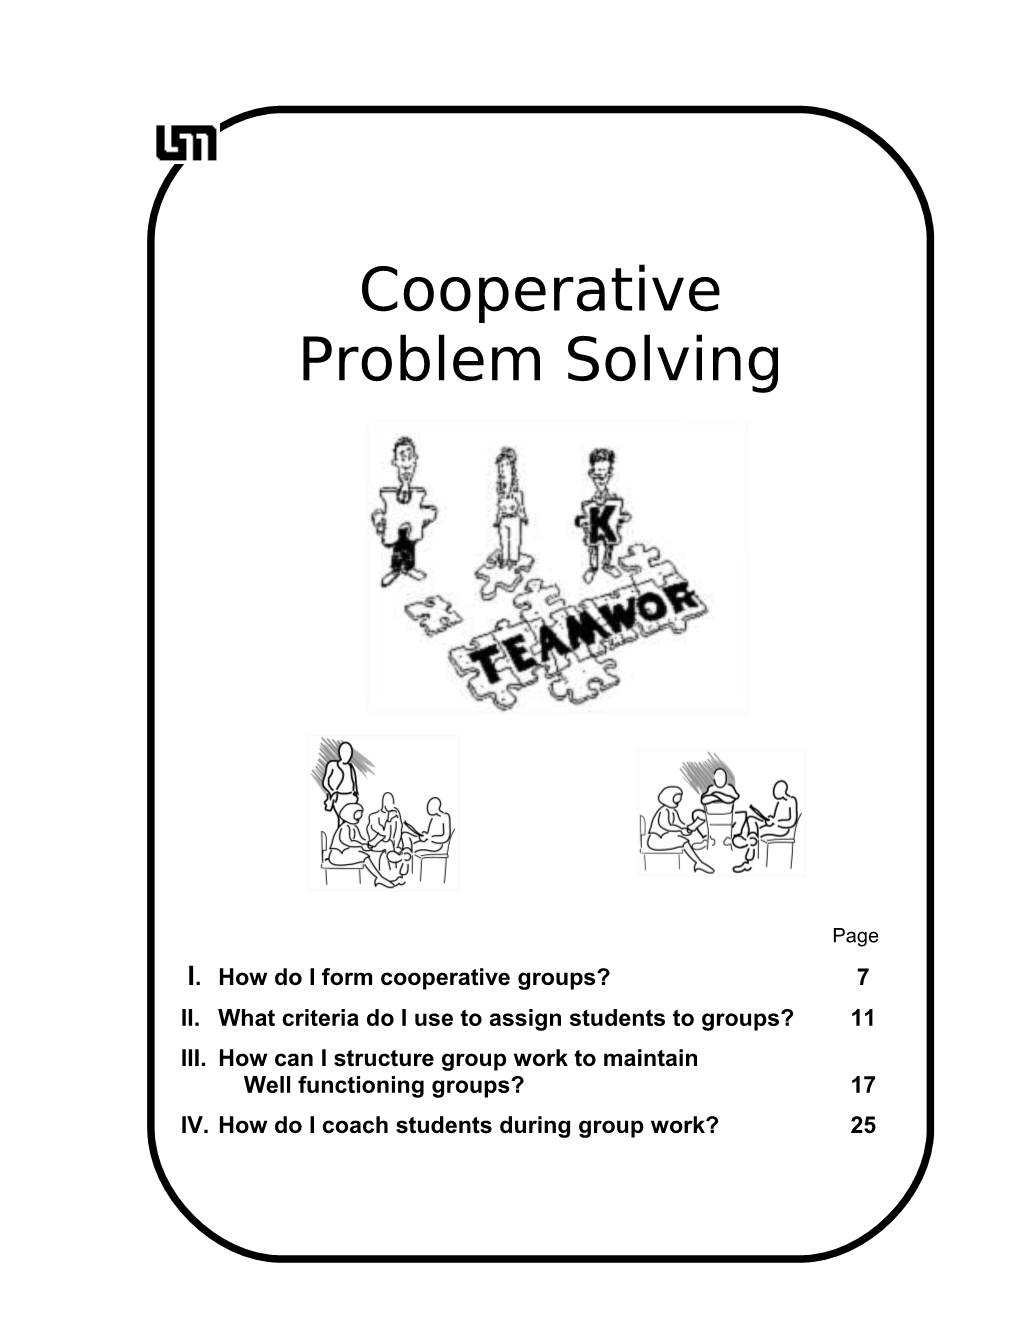 I. How Do I Form Cooperative Groups? 7